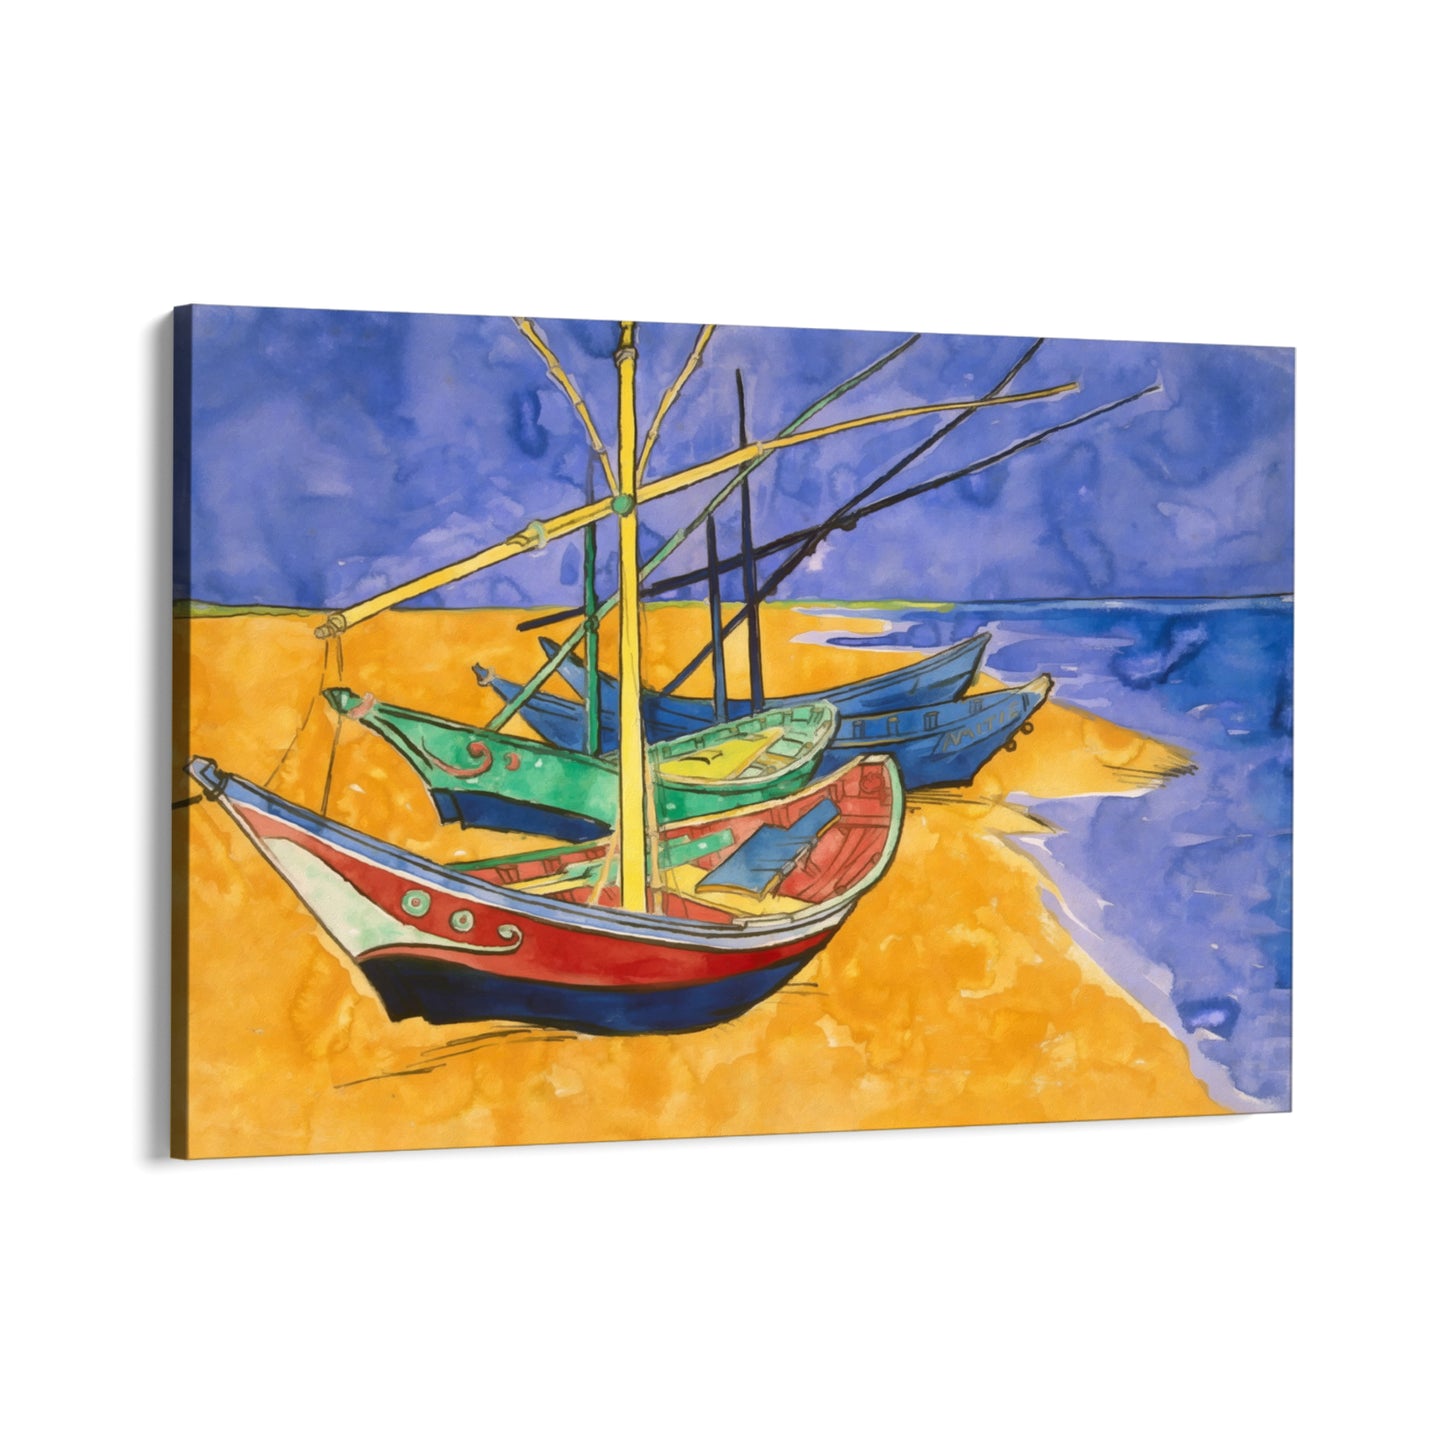 Kalastusveneet rannalla I, Vincent Van Gogh